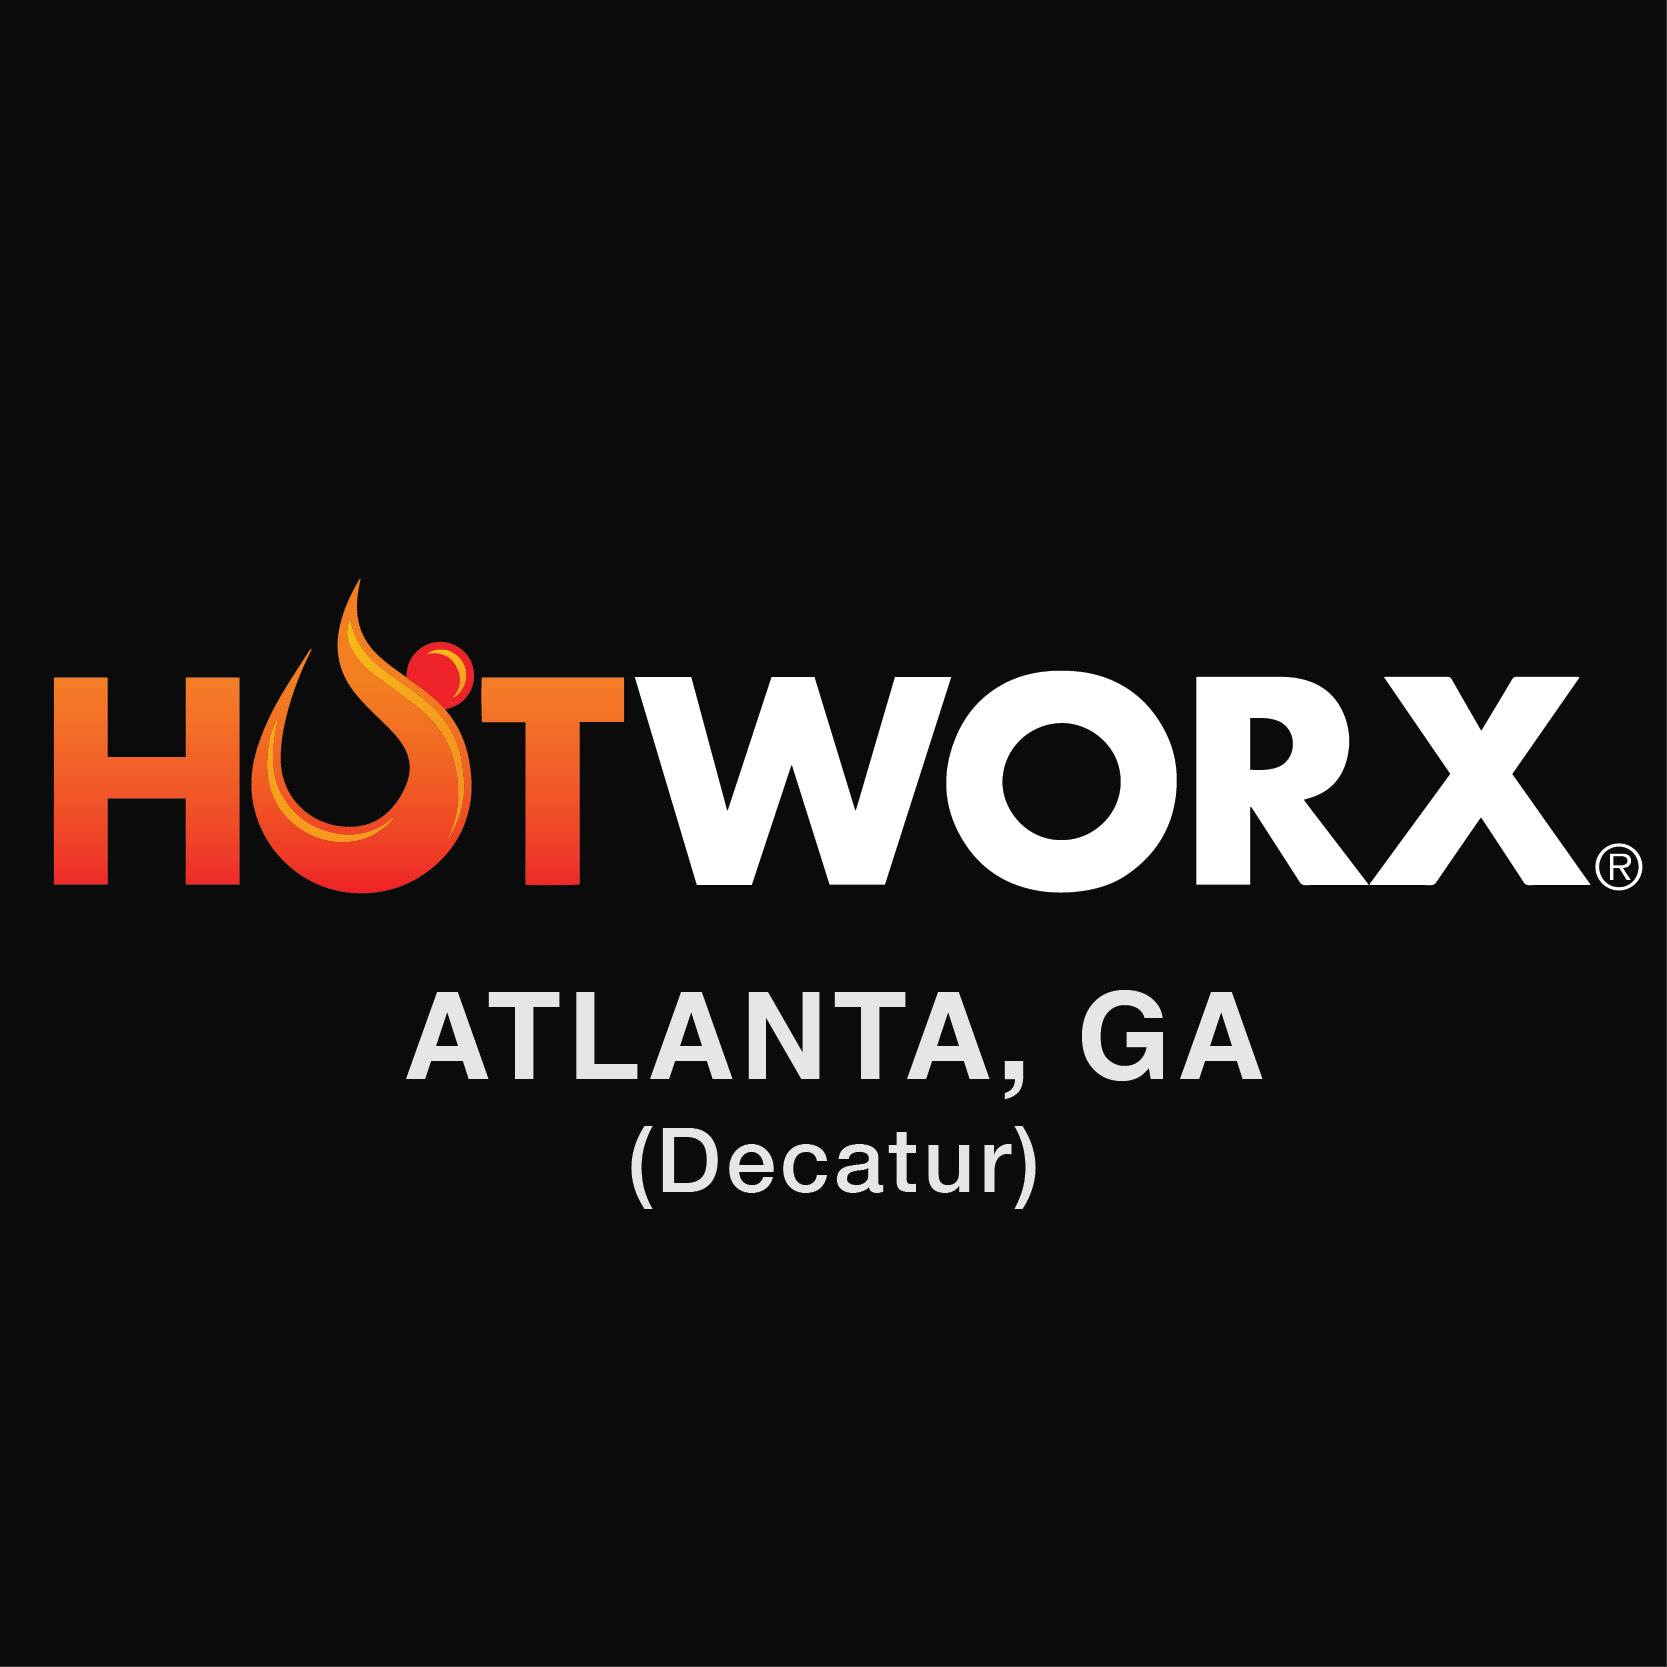 HOTWORX - Atlanta, GA (Decatur)'s Logo